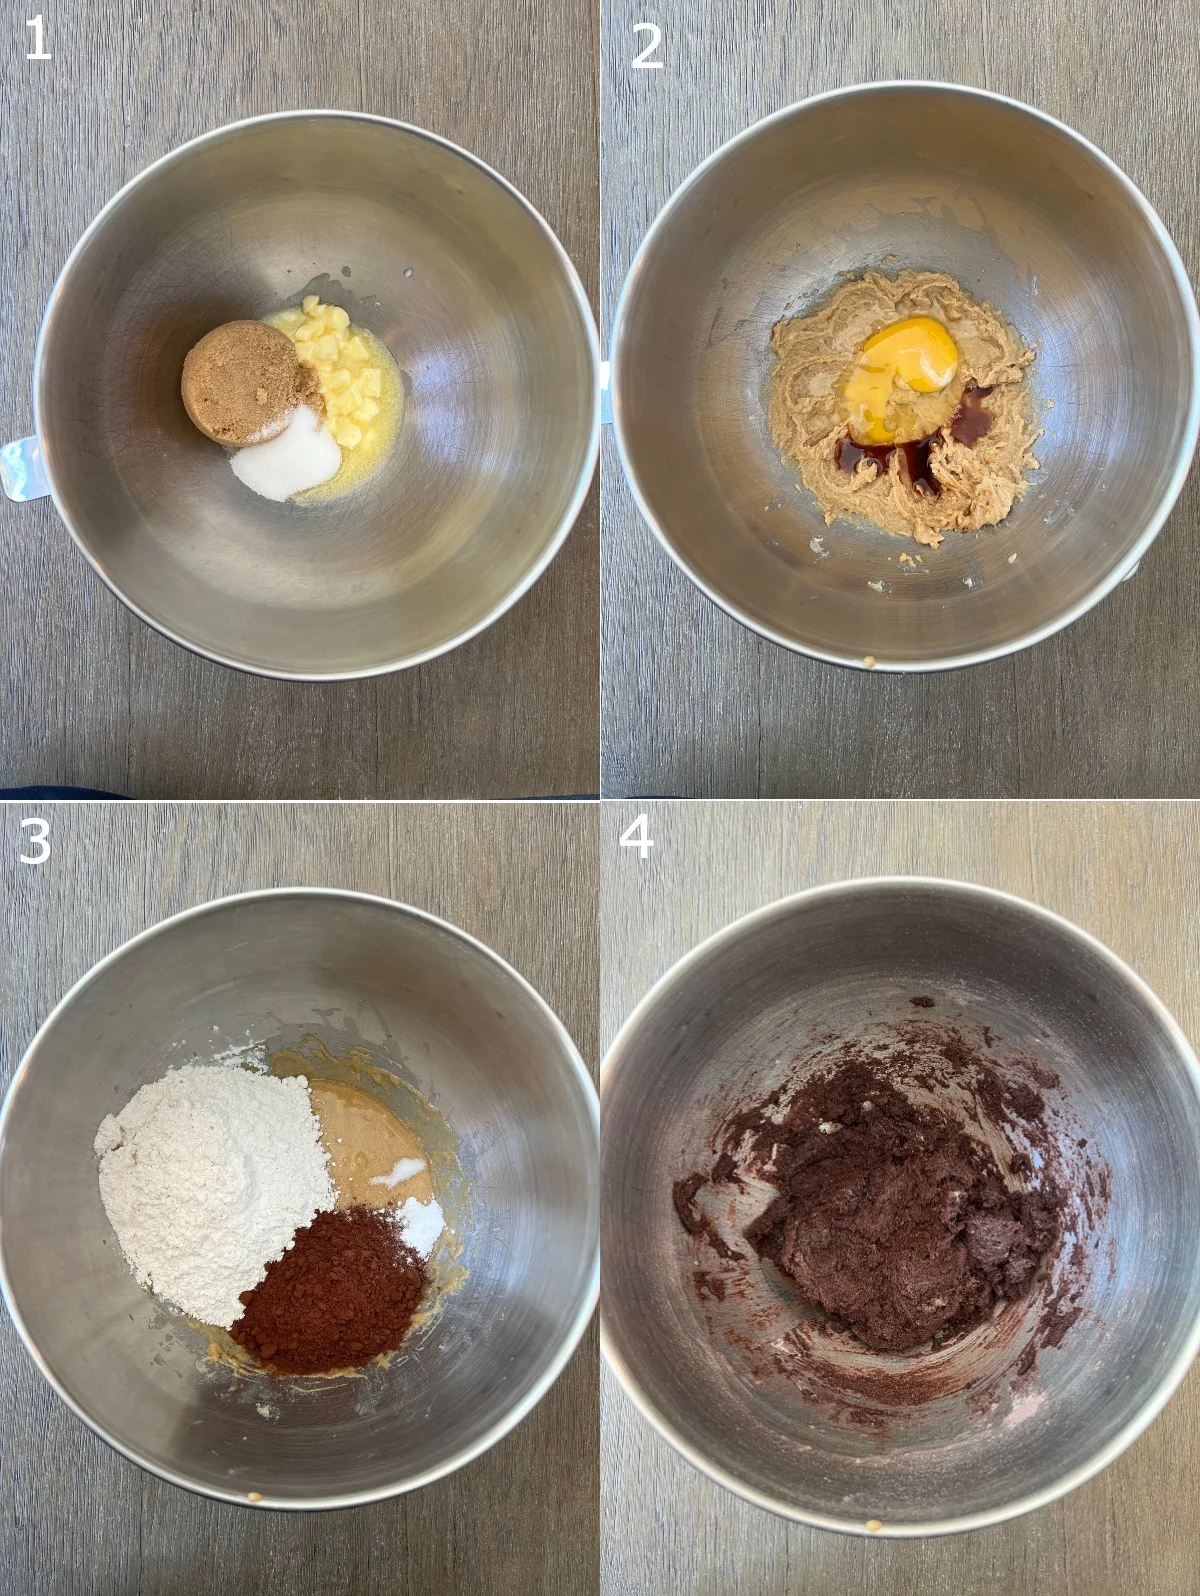 Making Chocolate Cookies